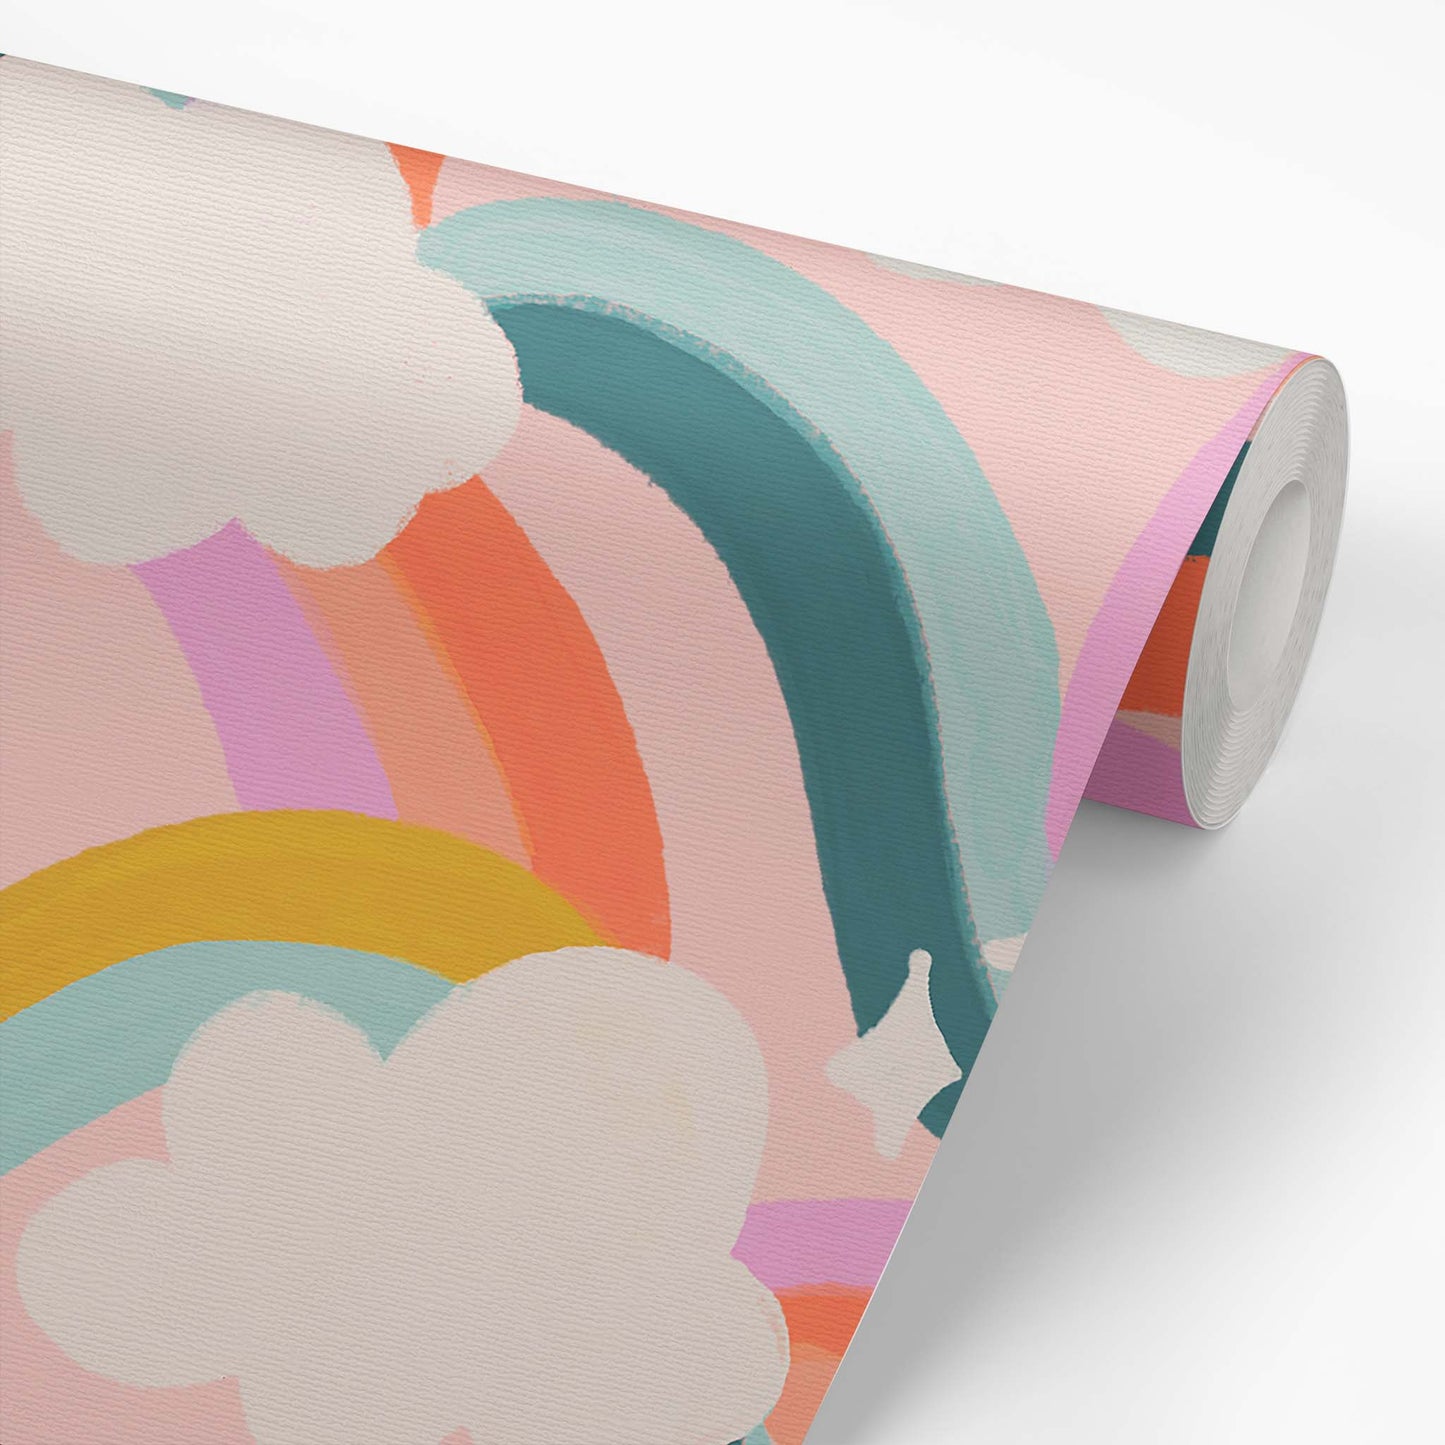 Wallpaper panel featuring Iris + Sea Dreamland- Multi a colorful cloud pattern